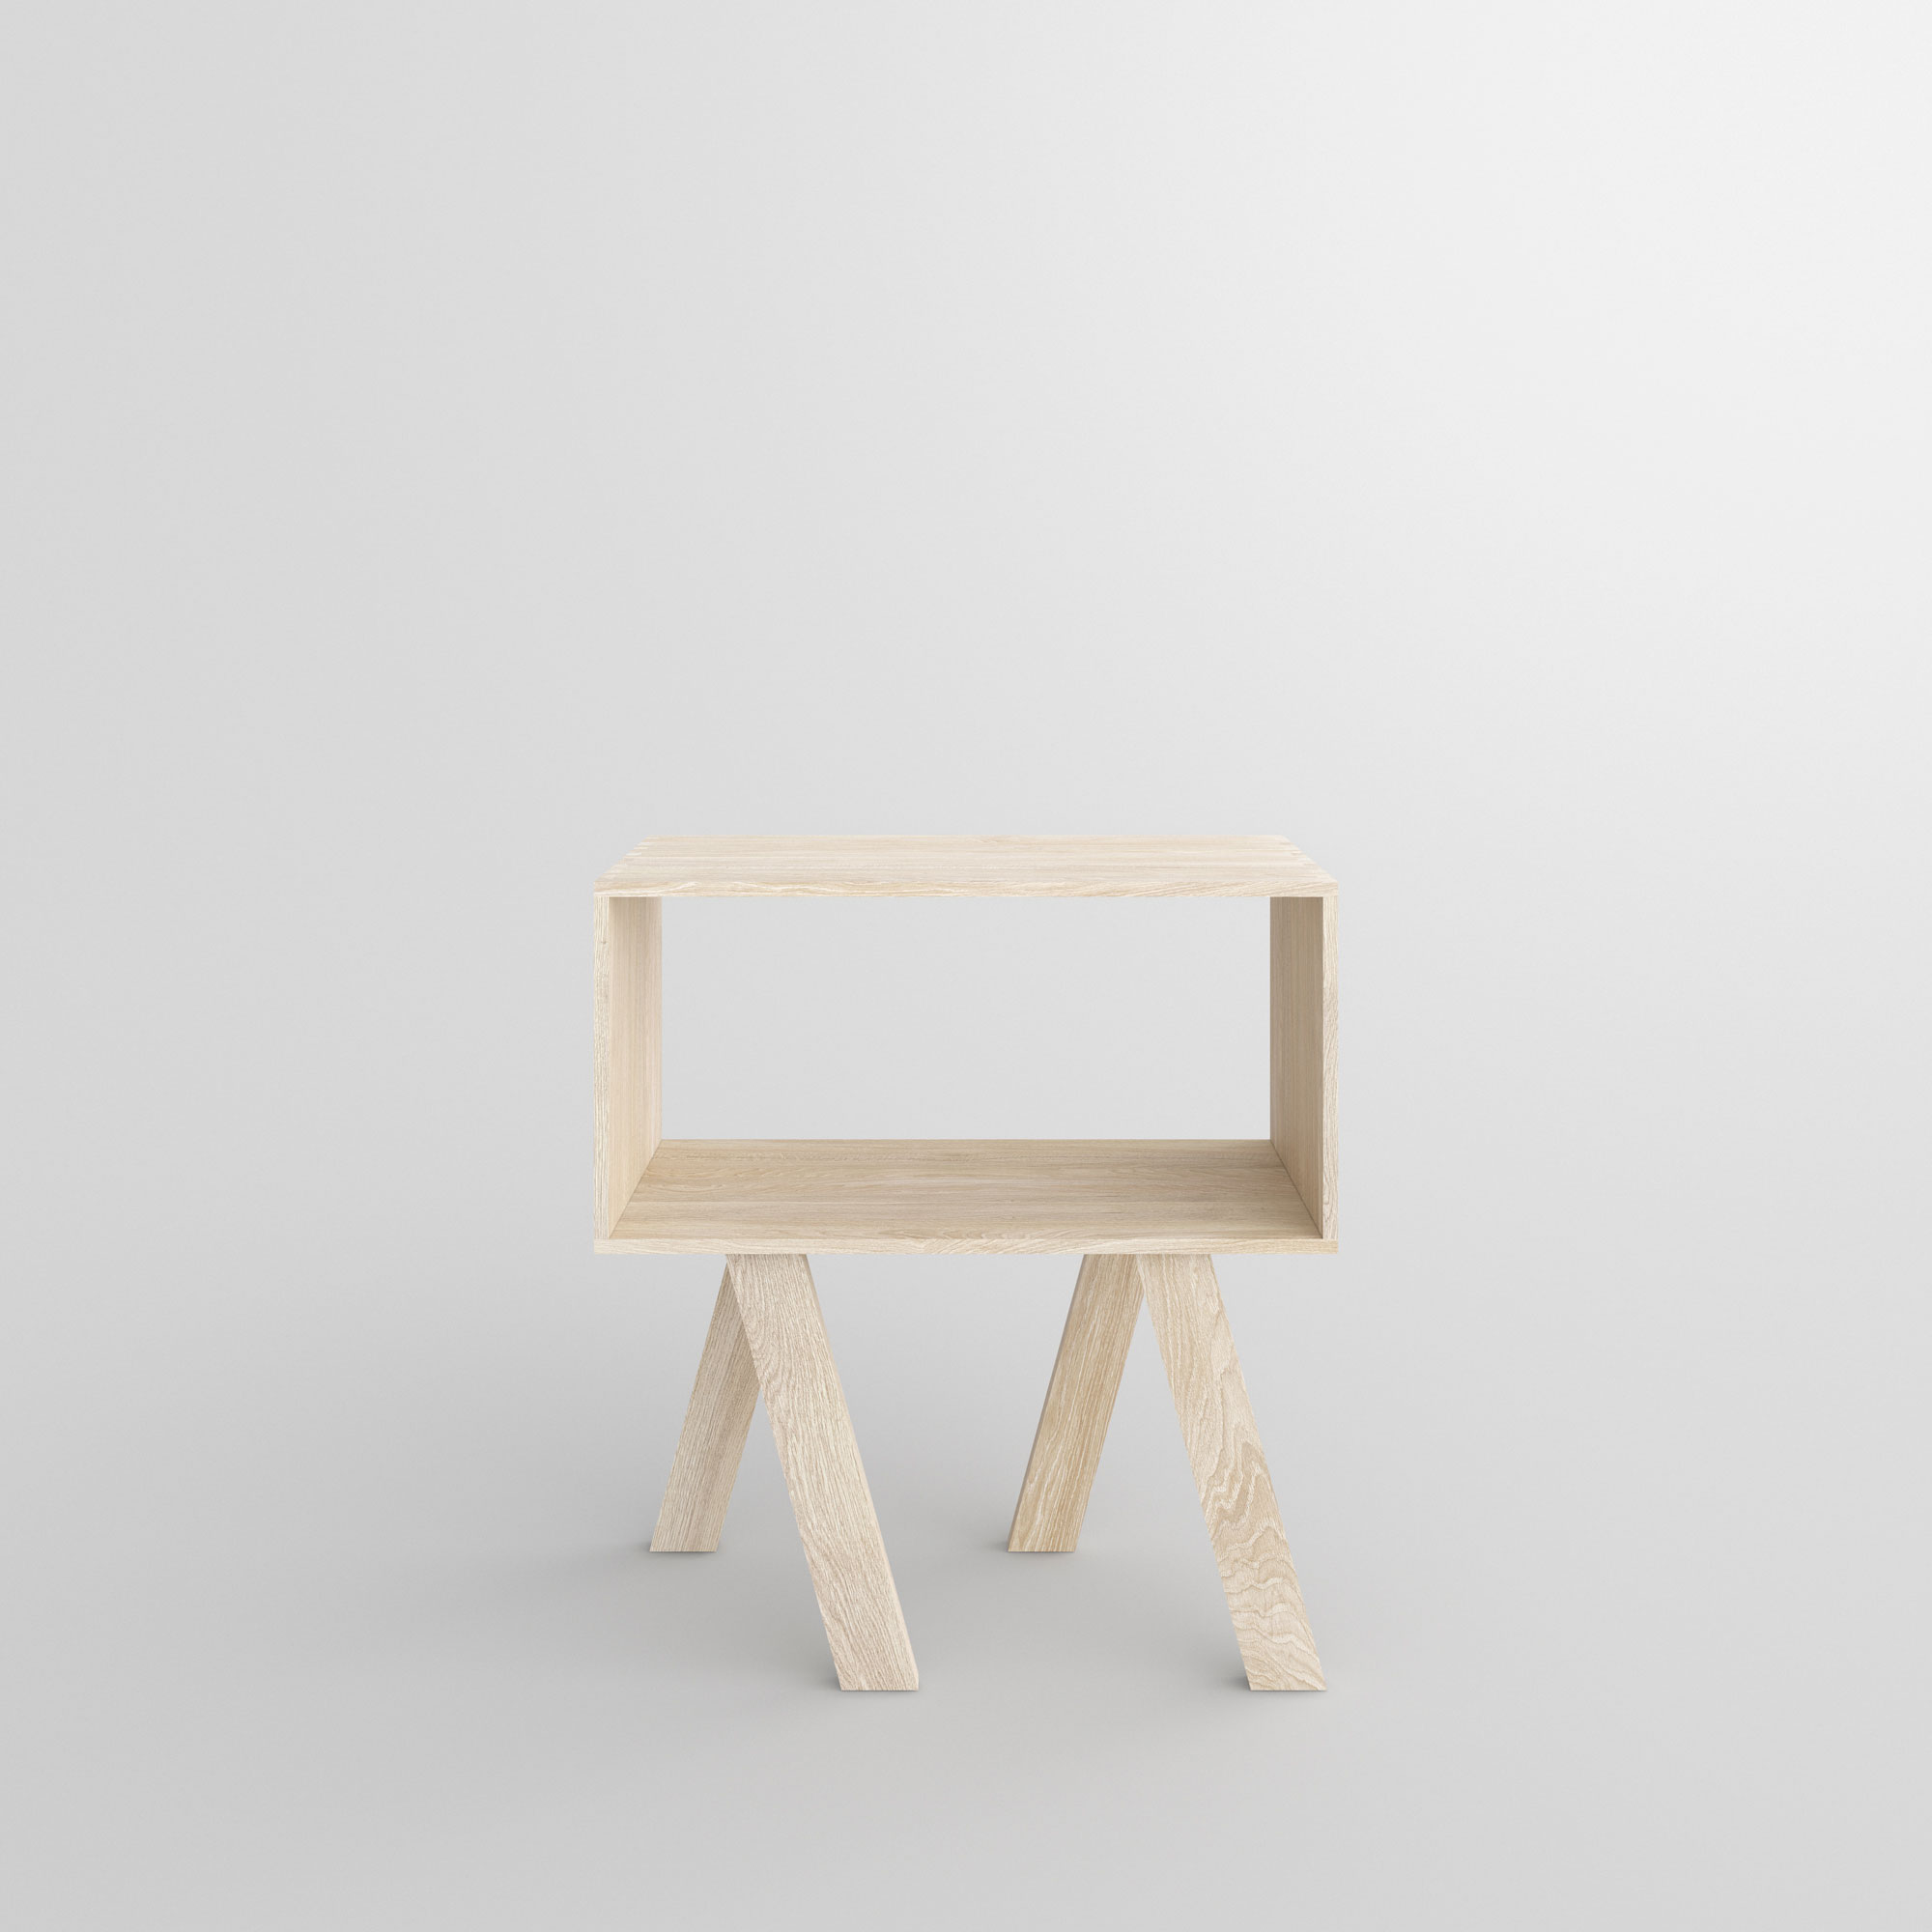 Designer Solid Wood Shelf GO 0000 custom made in solid wood by vitamin design